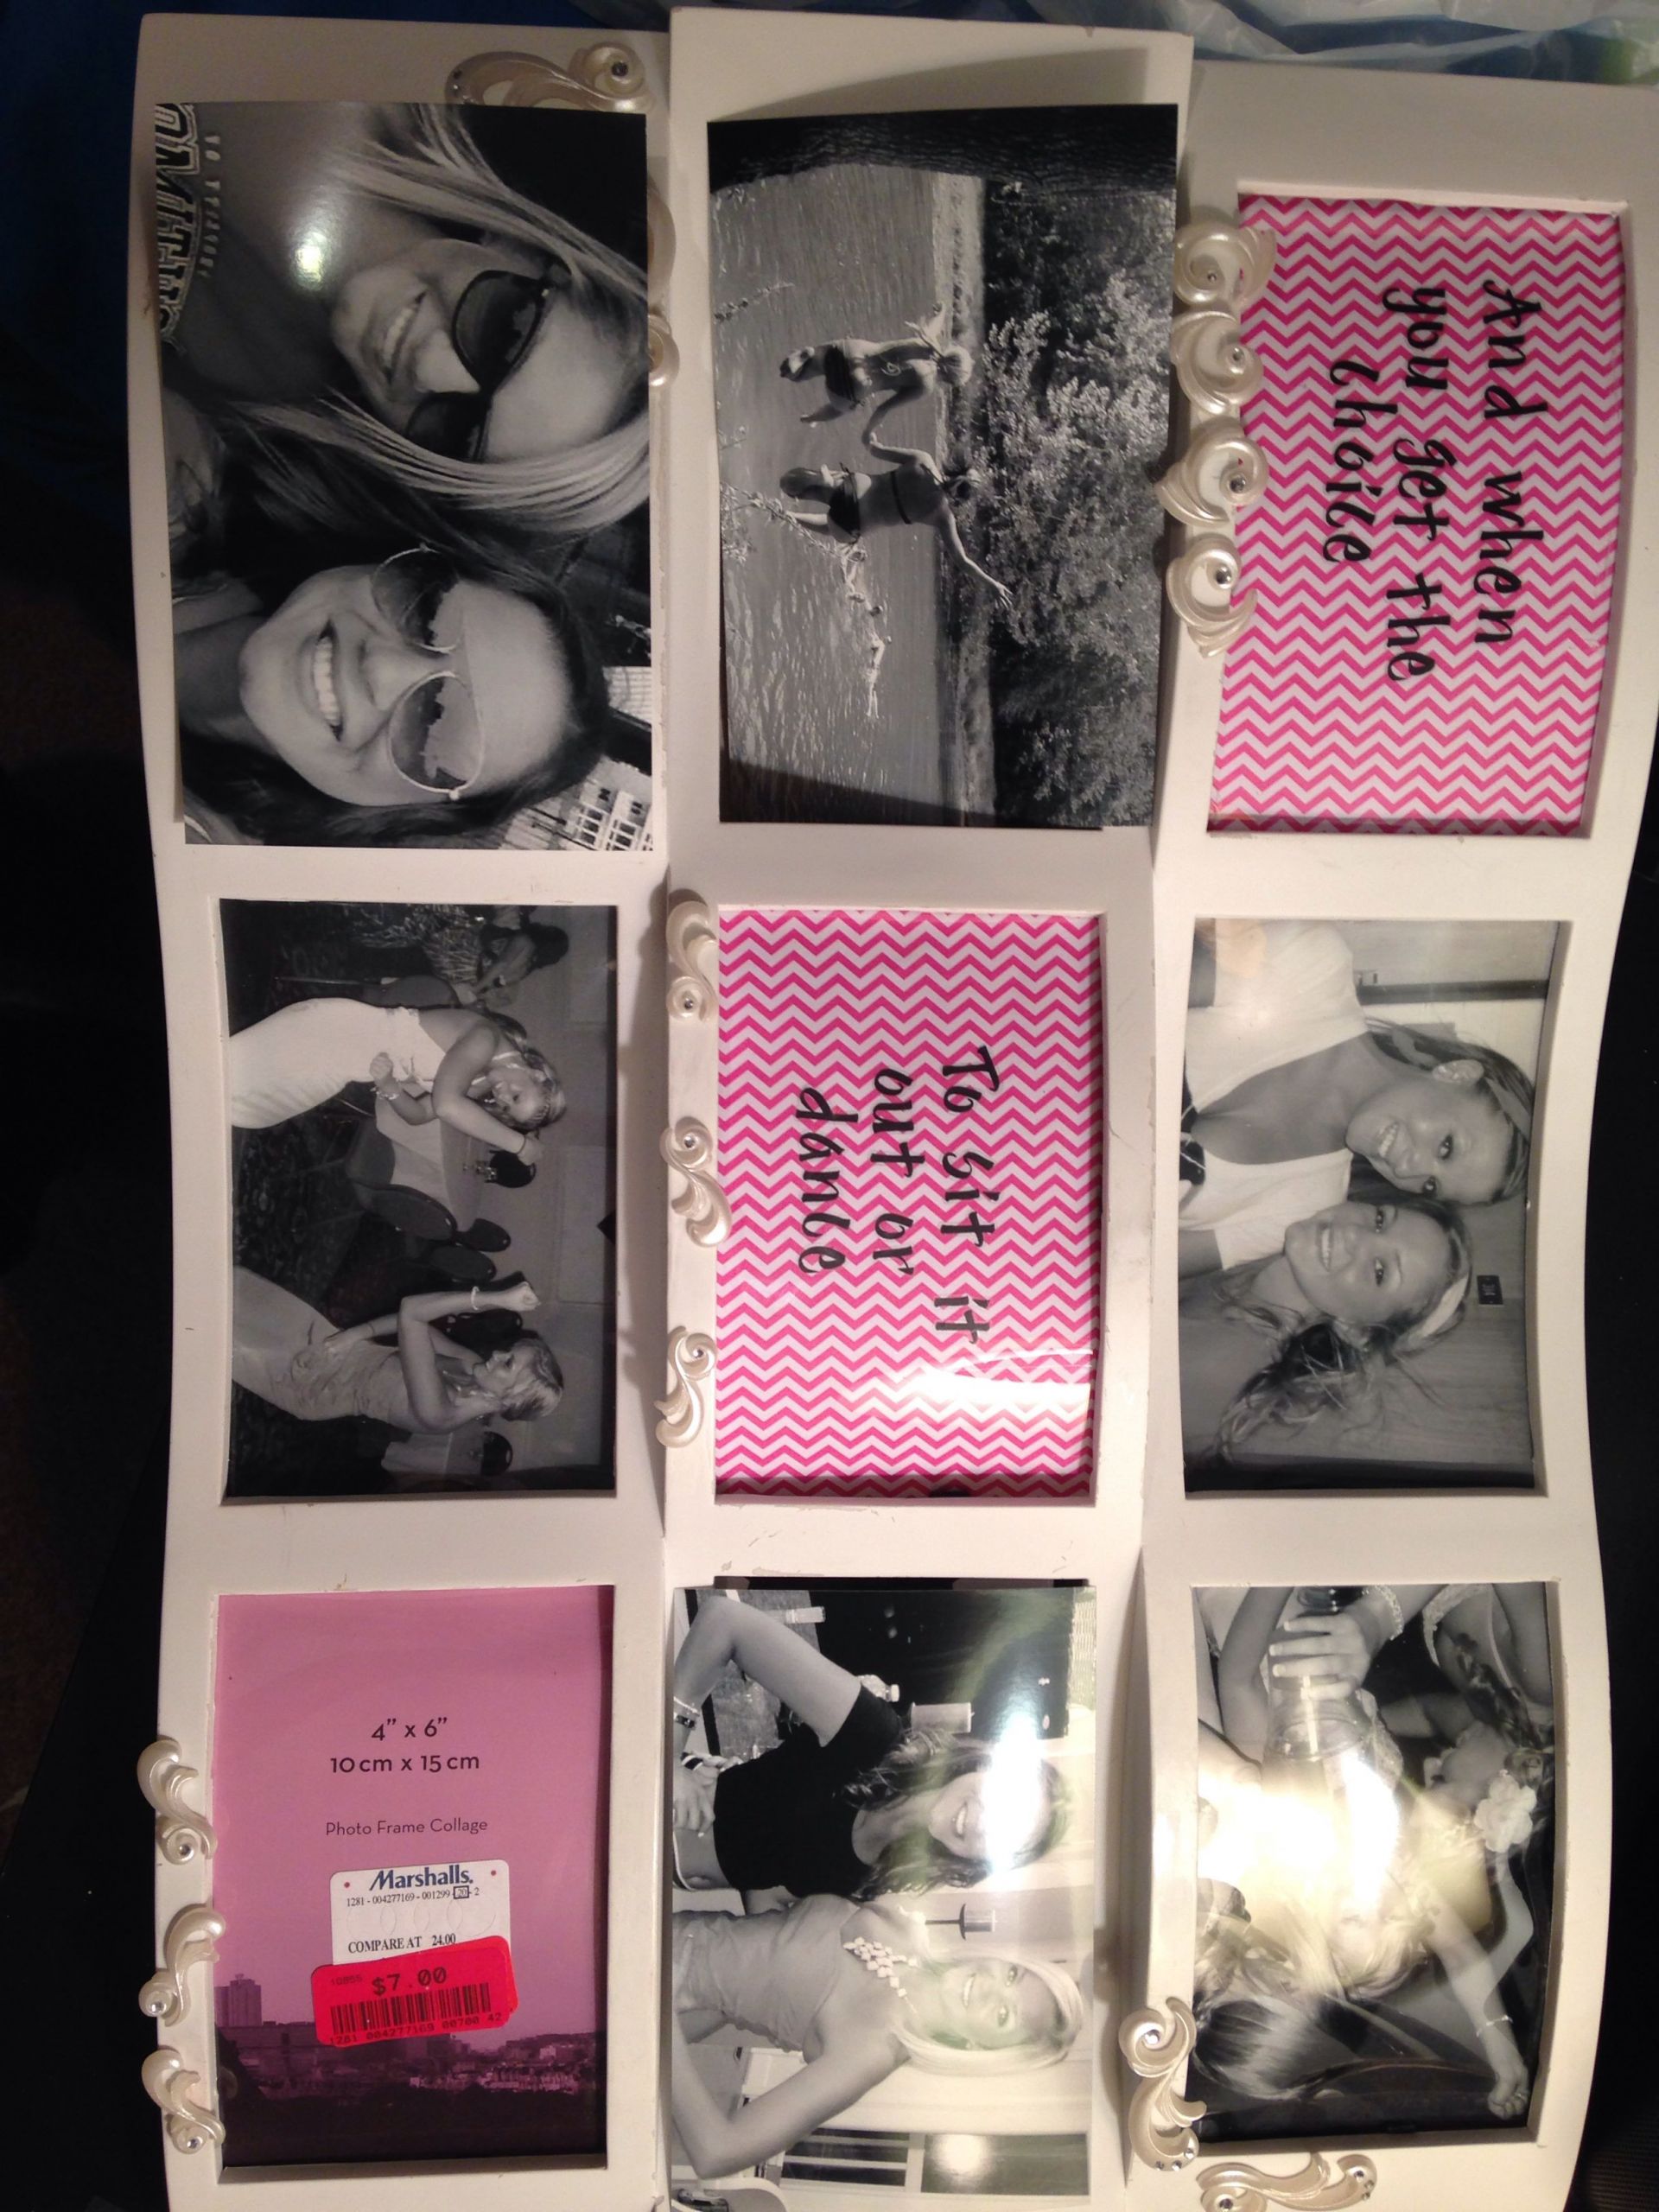 Best Friend Graduation Gift Ideas
 DIY picture frame collage graduation t to my best